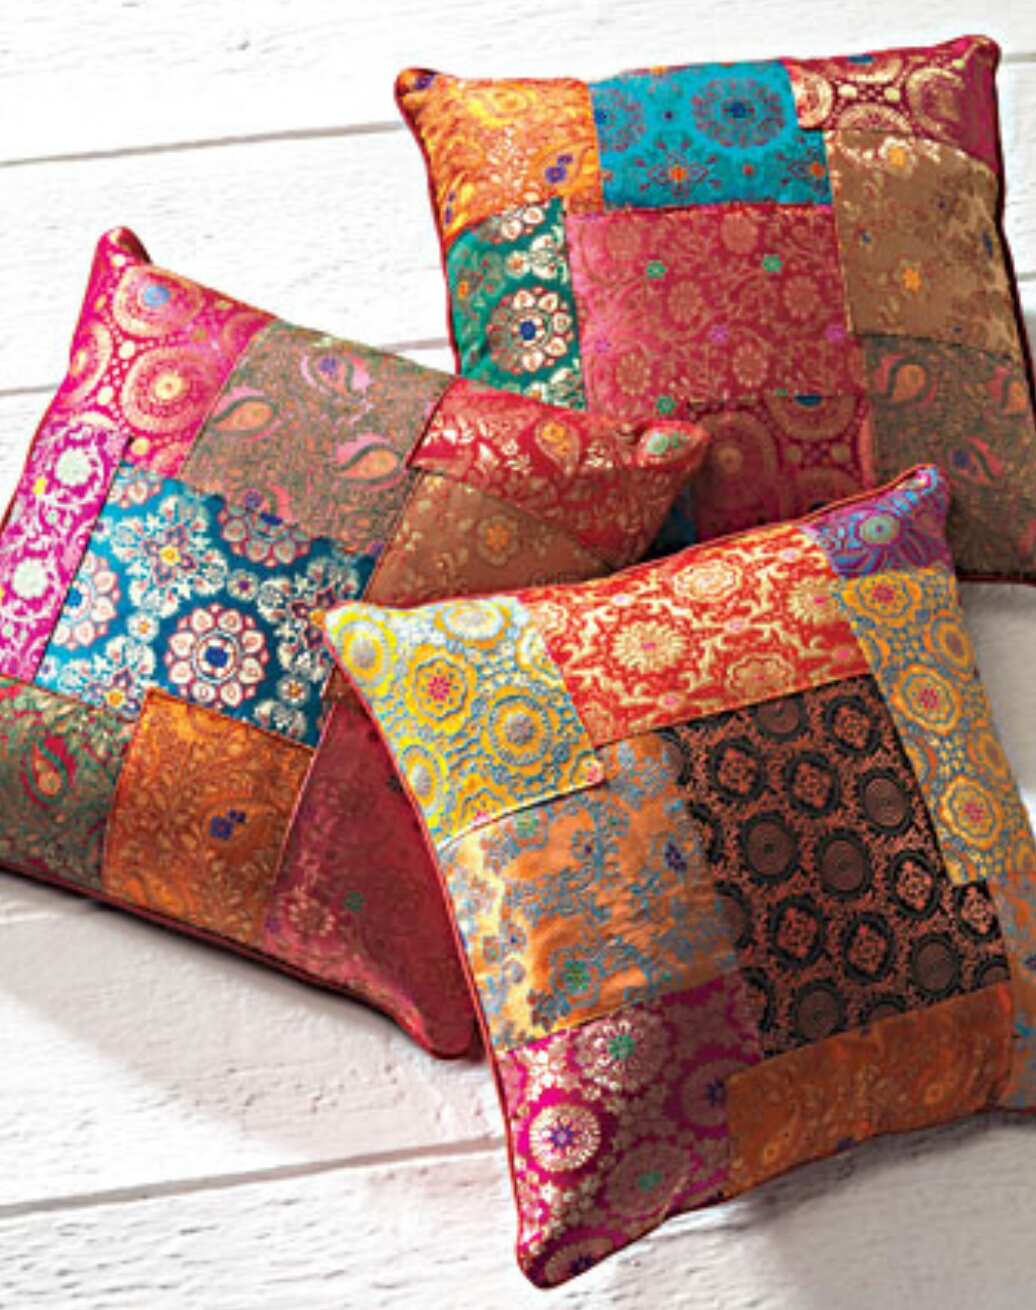 Indian Pillow and mattress Design